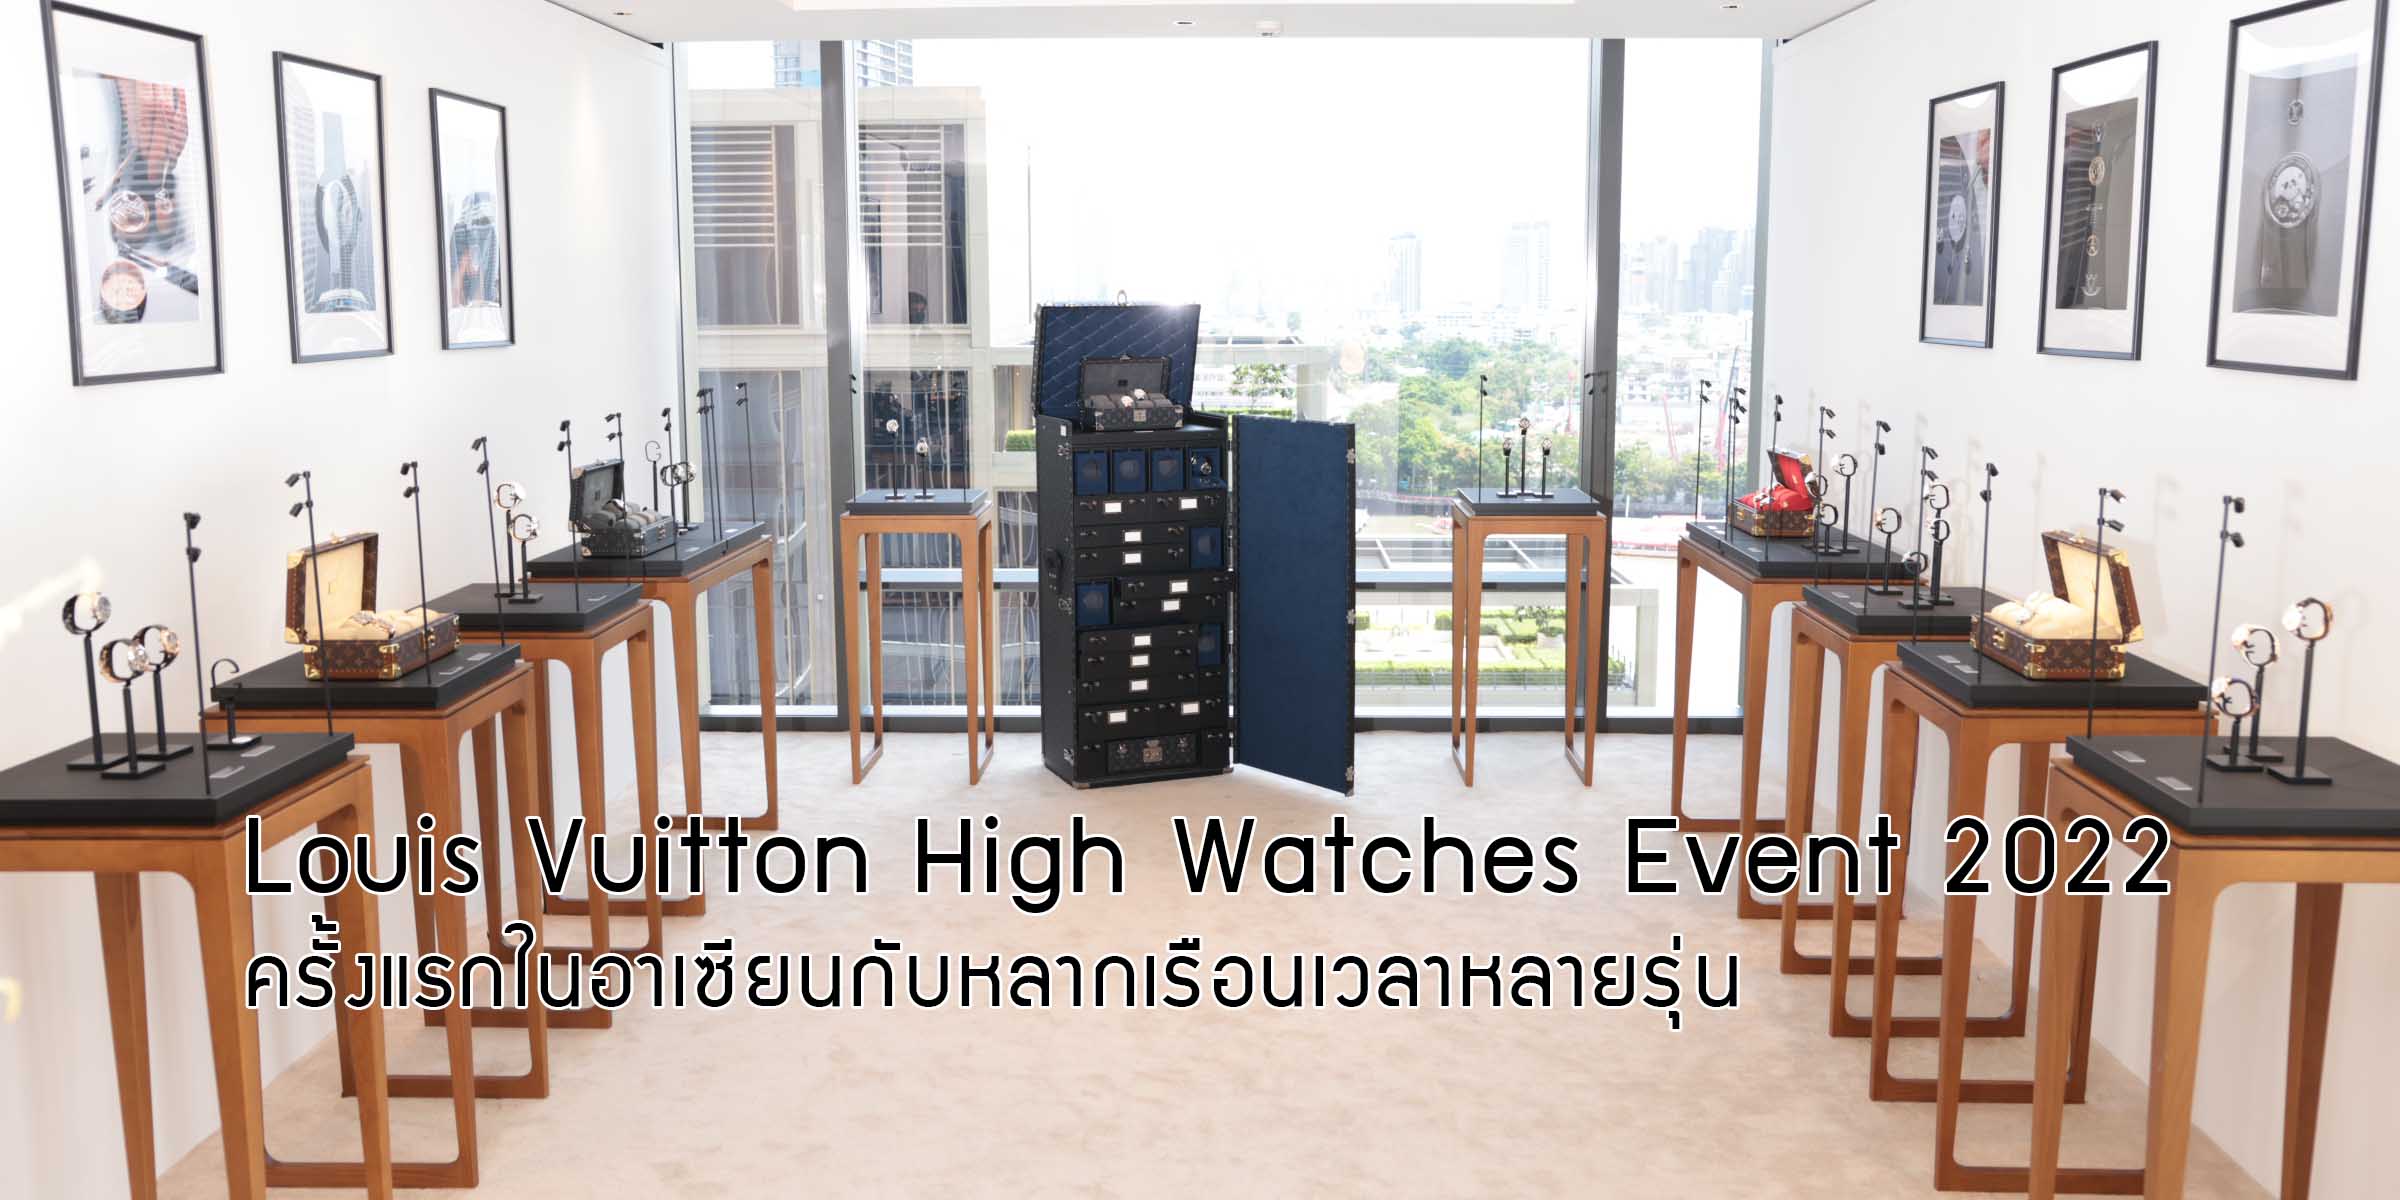 Louis Vuitton High Watches Event 2022